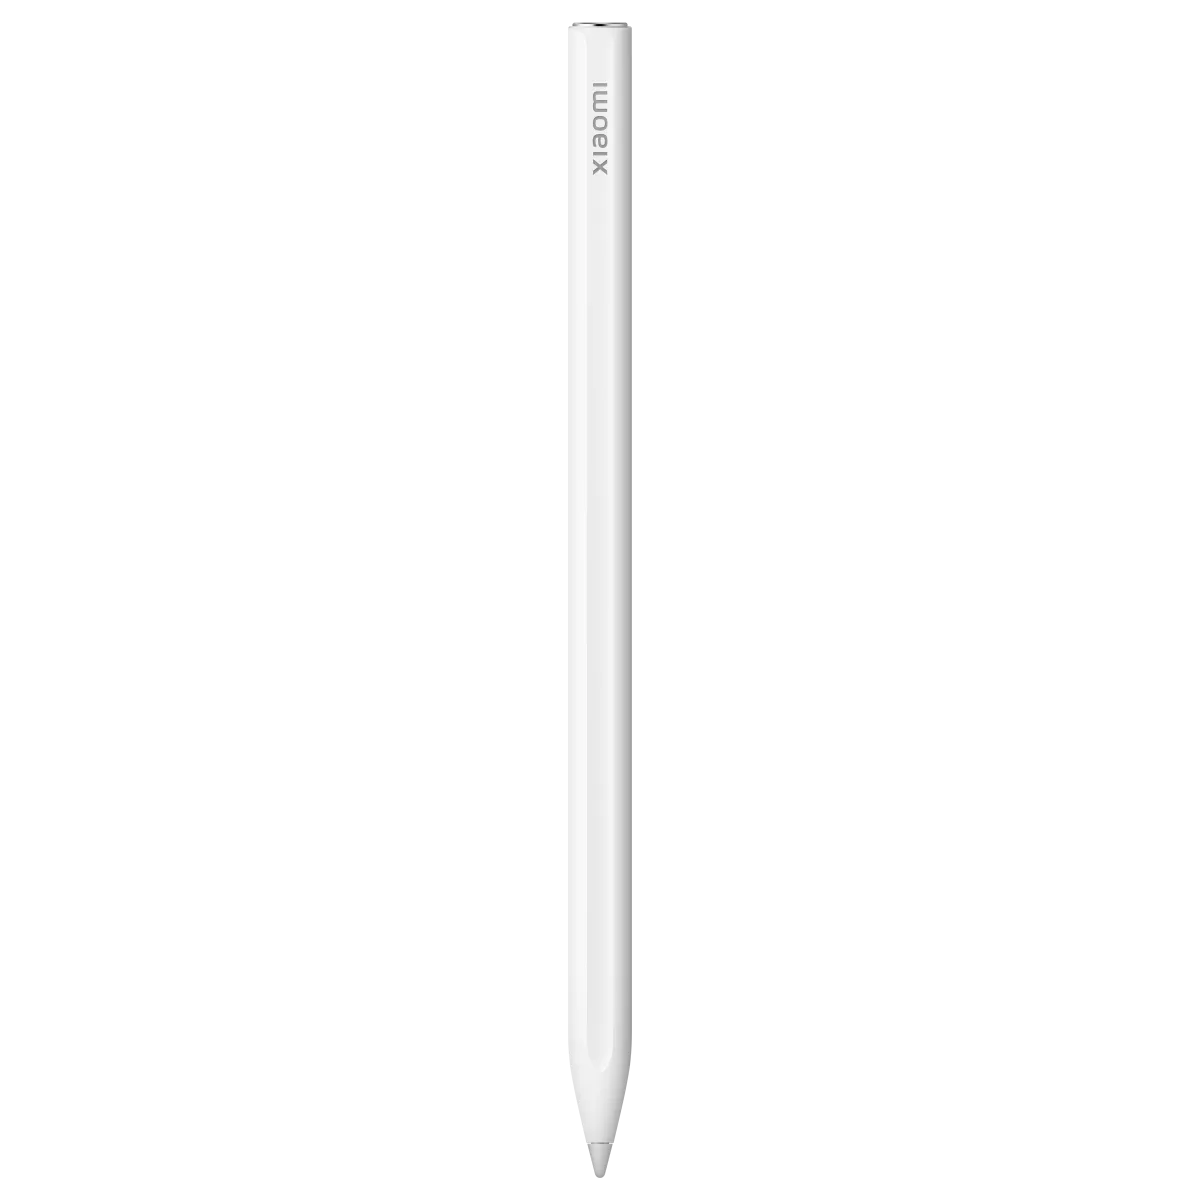 Xiaomi Smart Pen (2nd Generation)]Product Info - Mi India